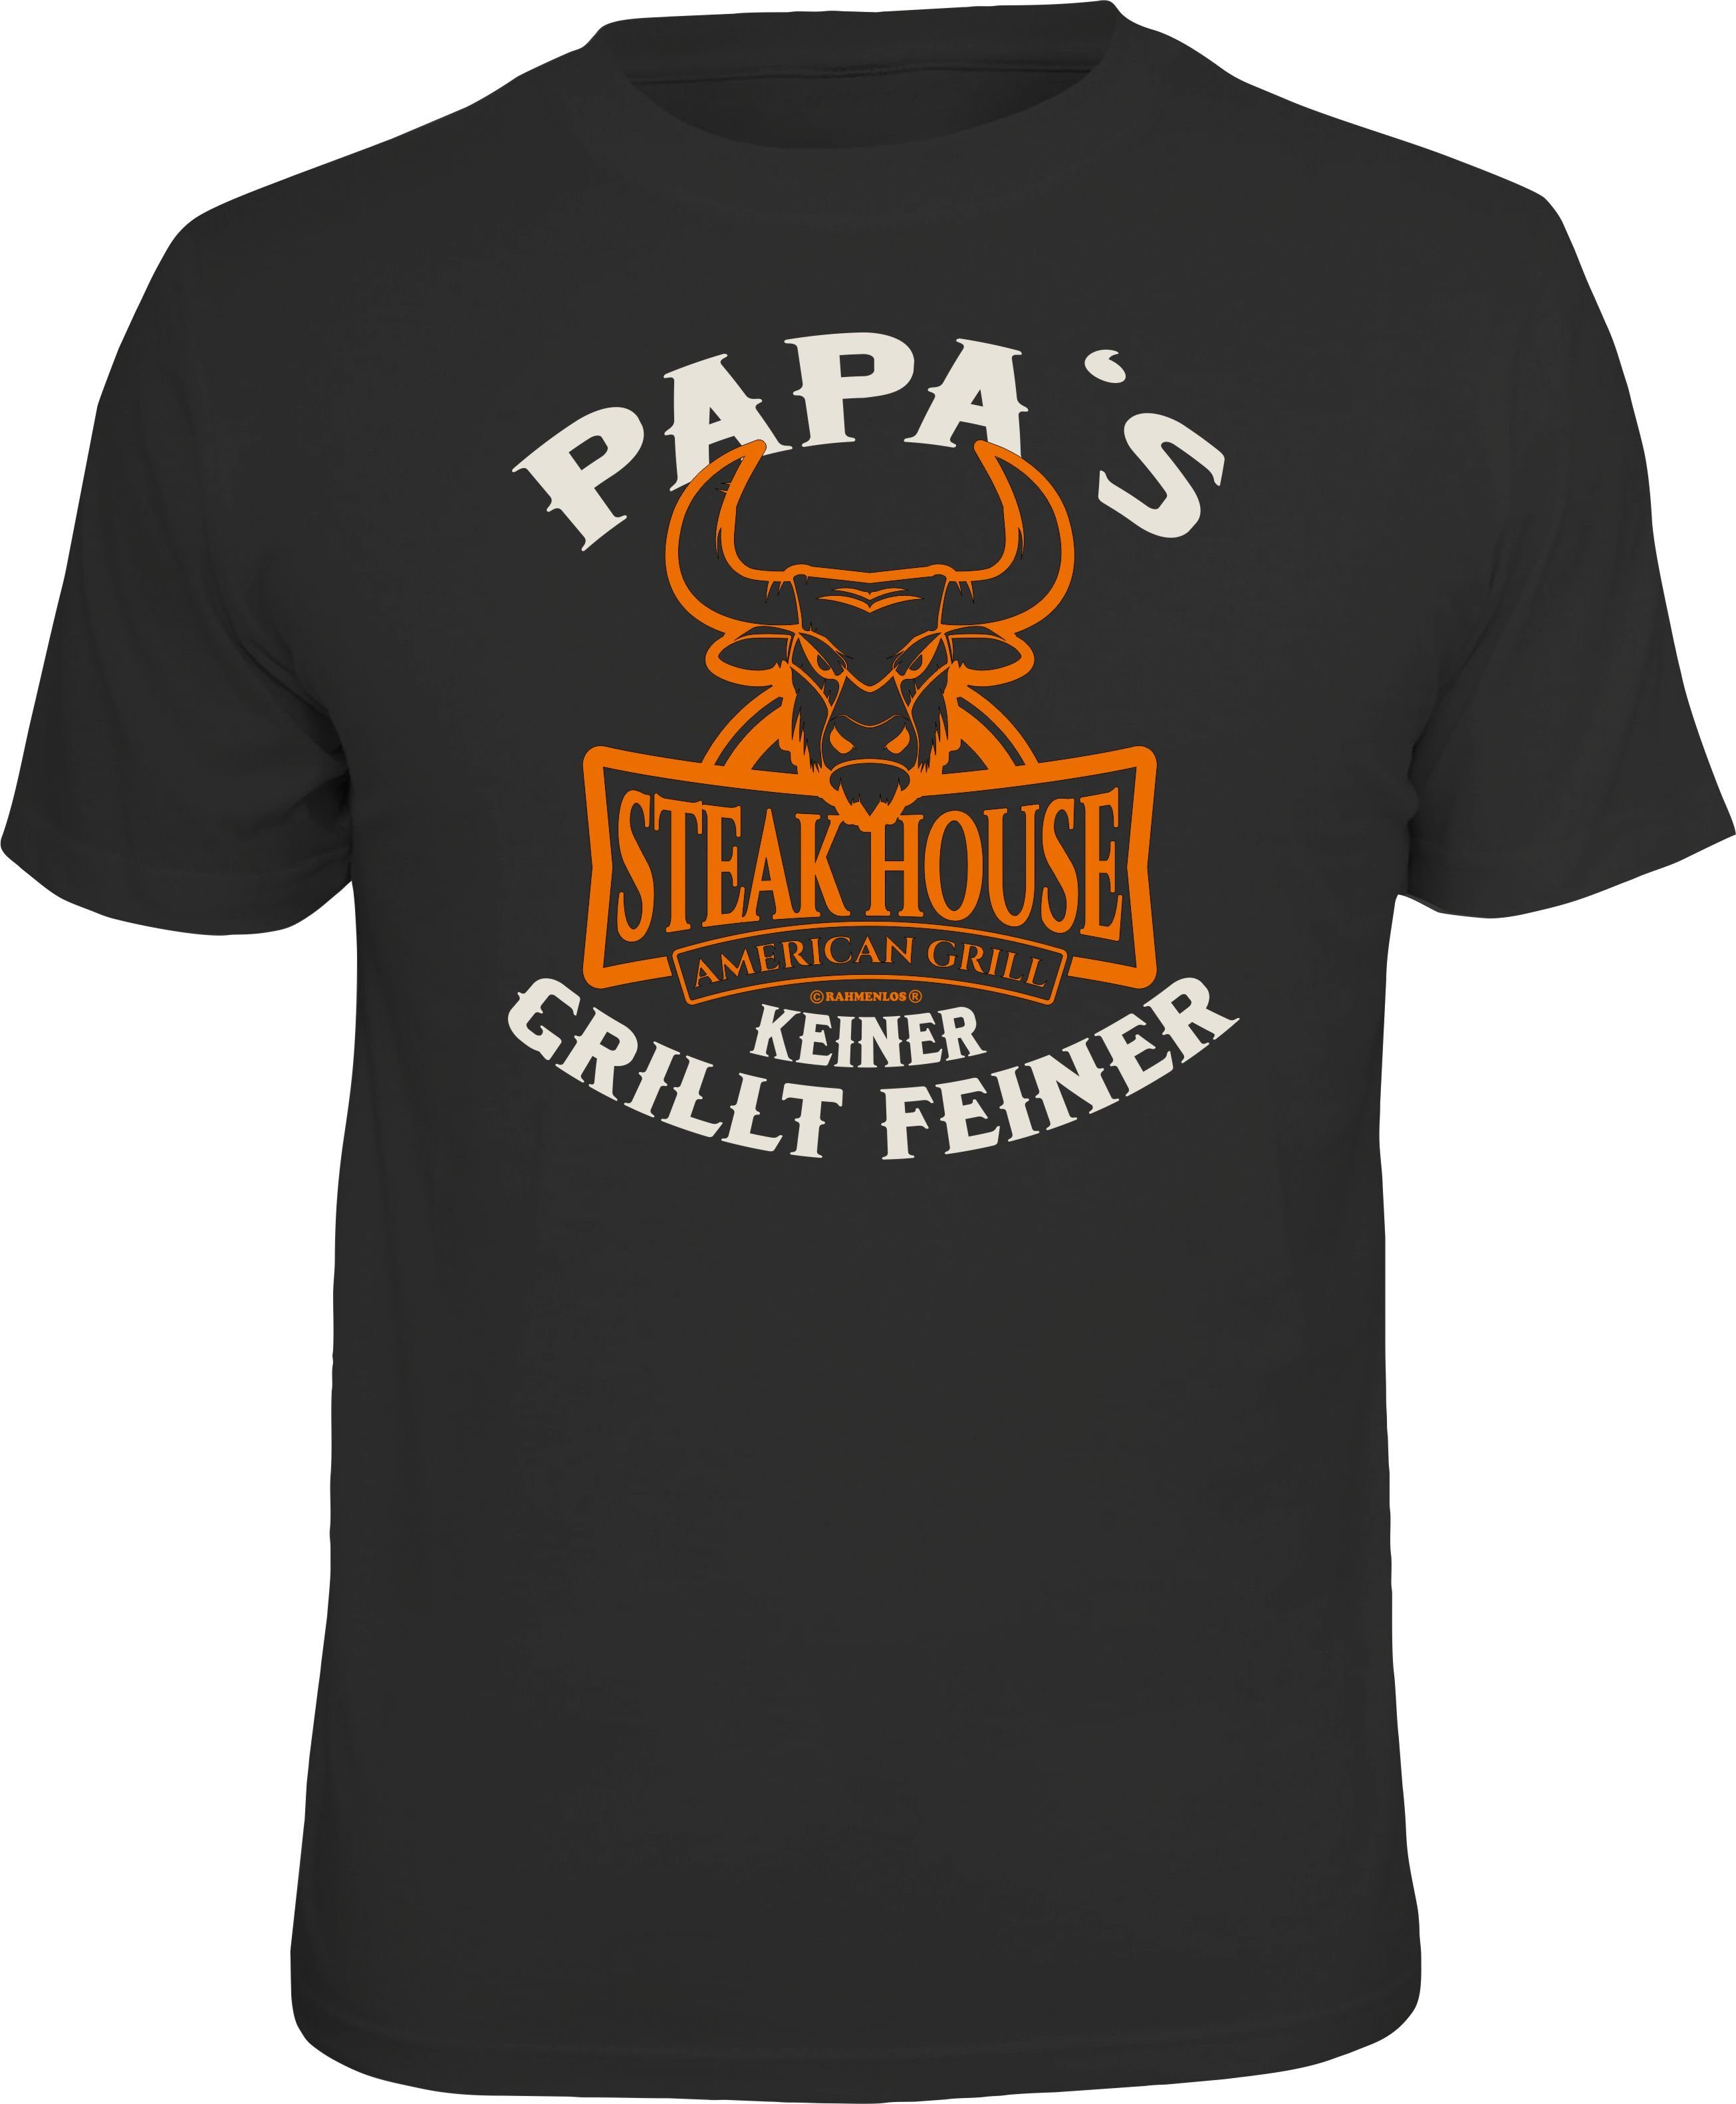 Rahmenlos T-Shirt als Geschenk für den Vater am Grill: Papa's Steakhouse